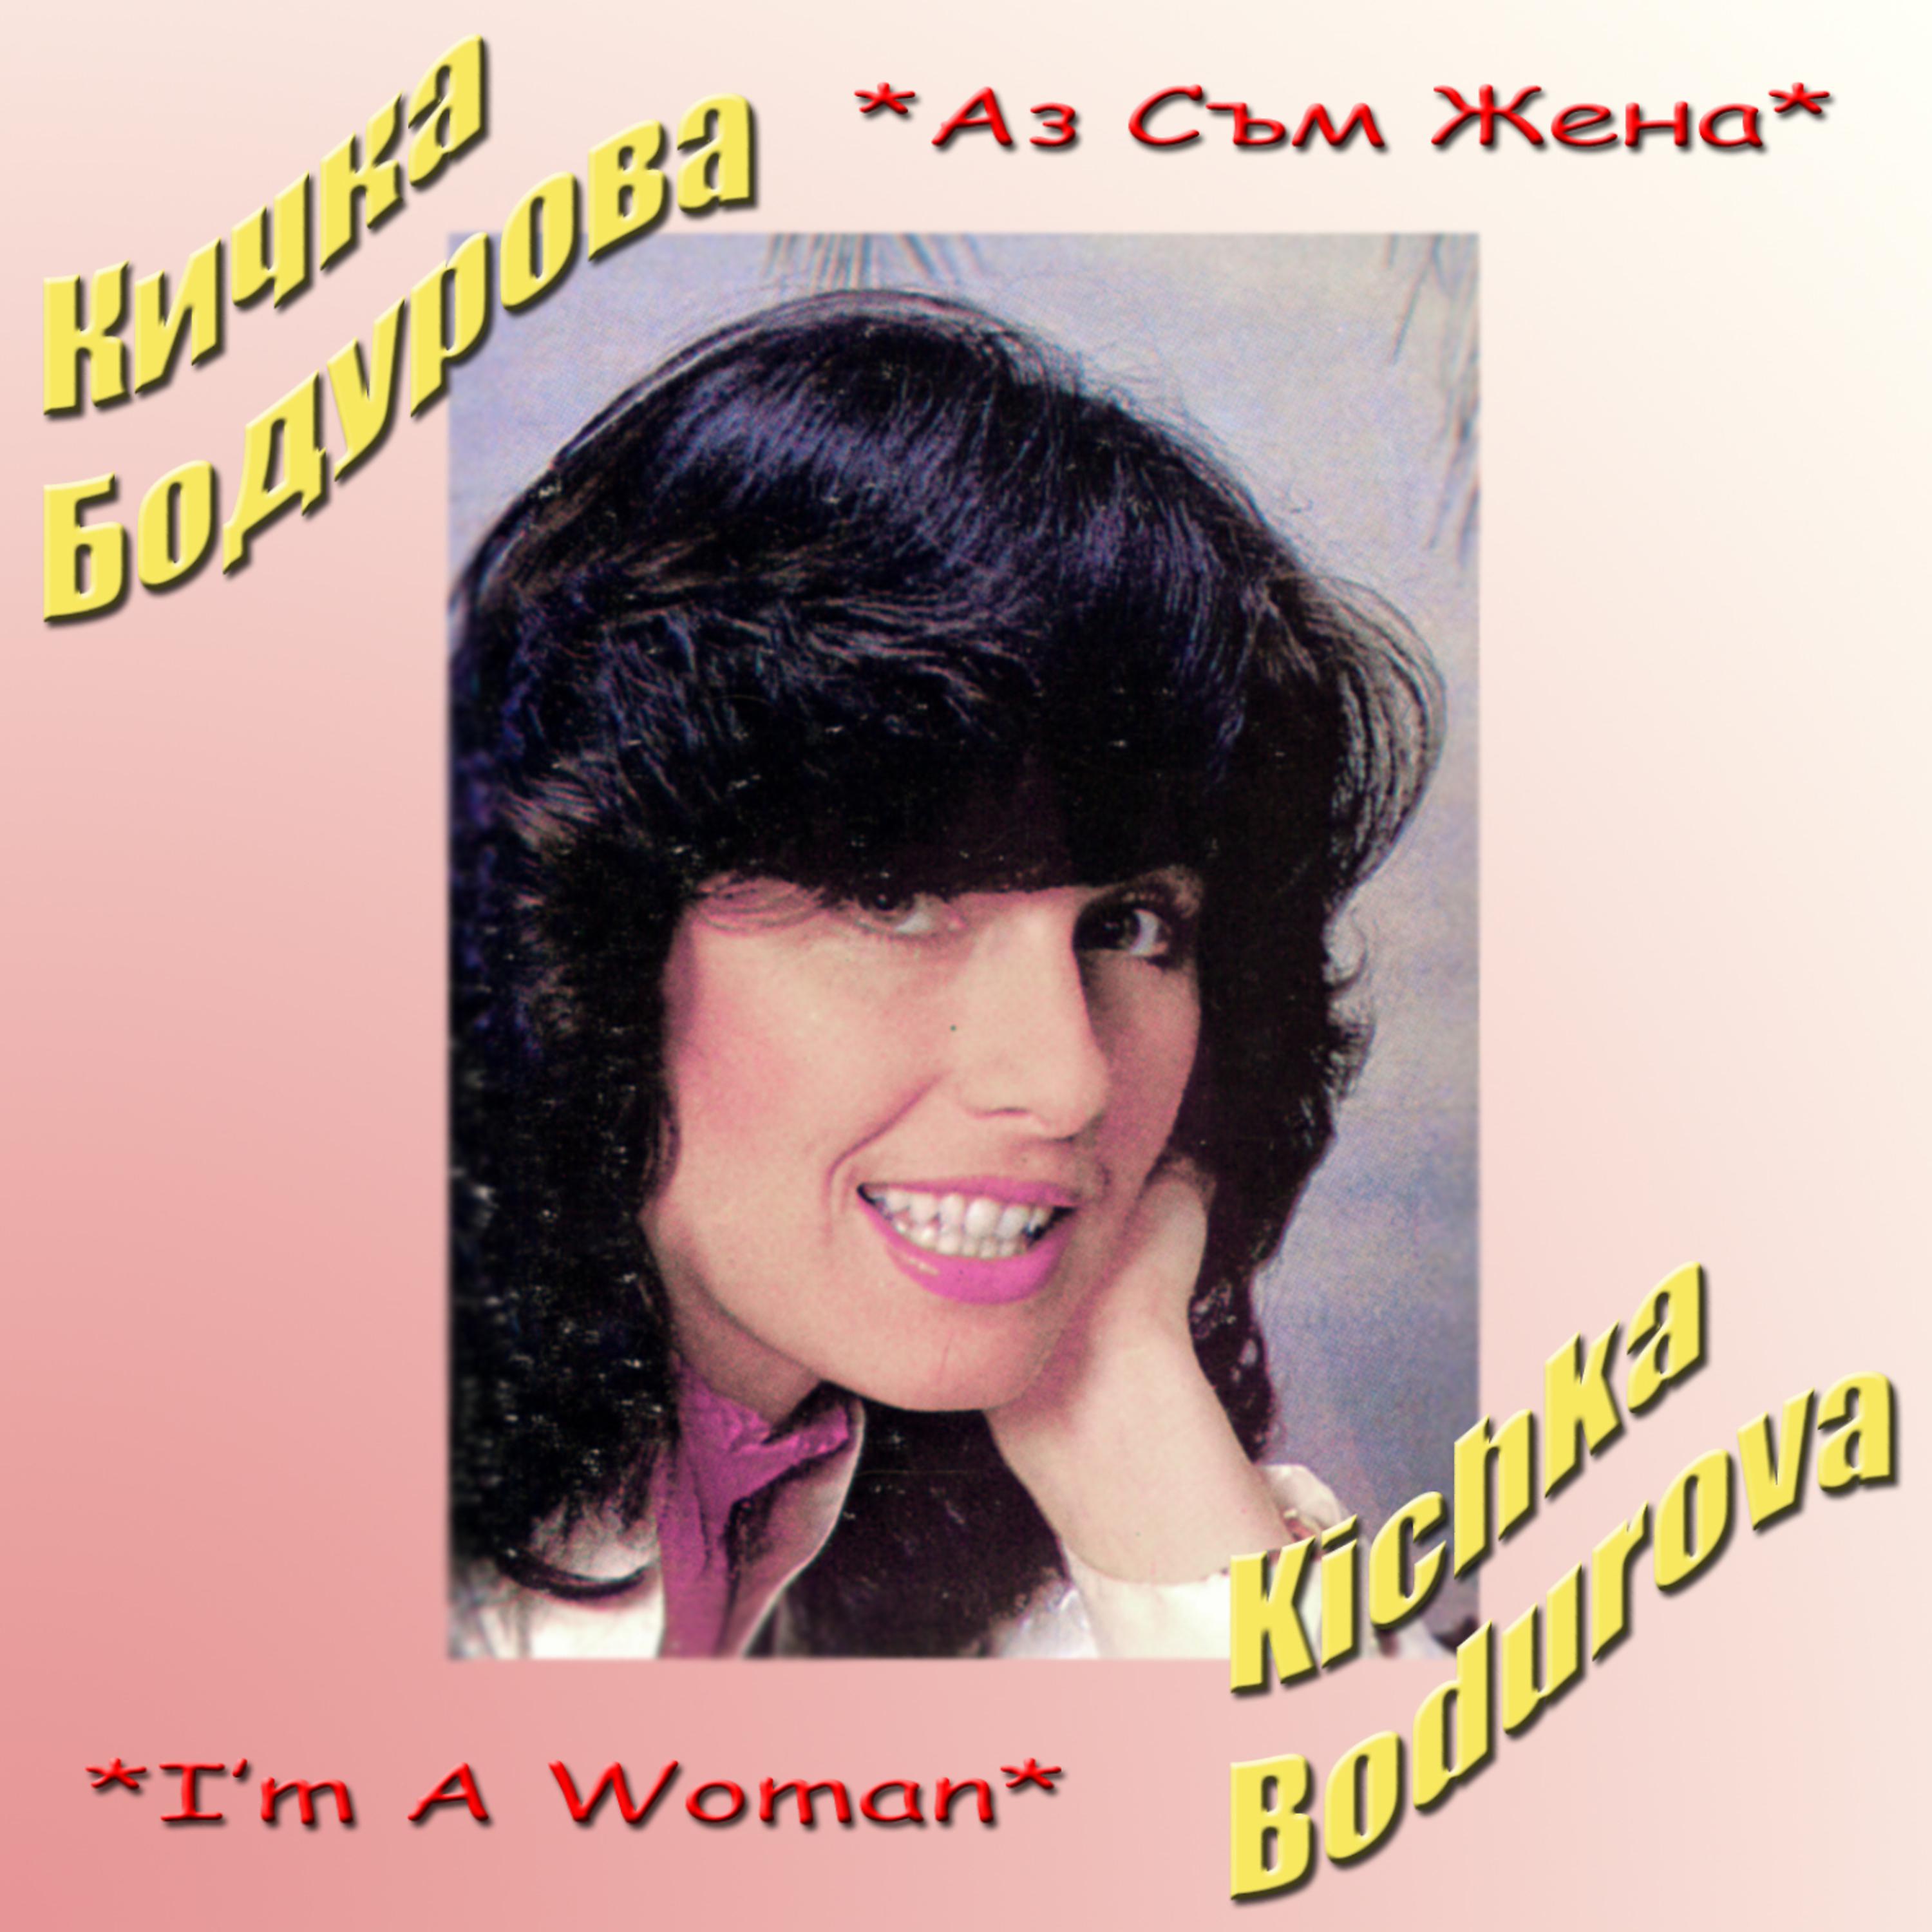 Музыка песня жена. Kichka Bodurova. Певица блюз Италия большой кичкой.